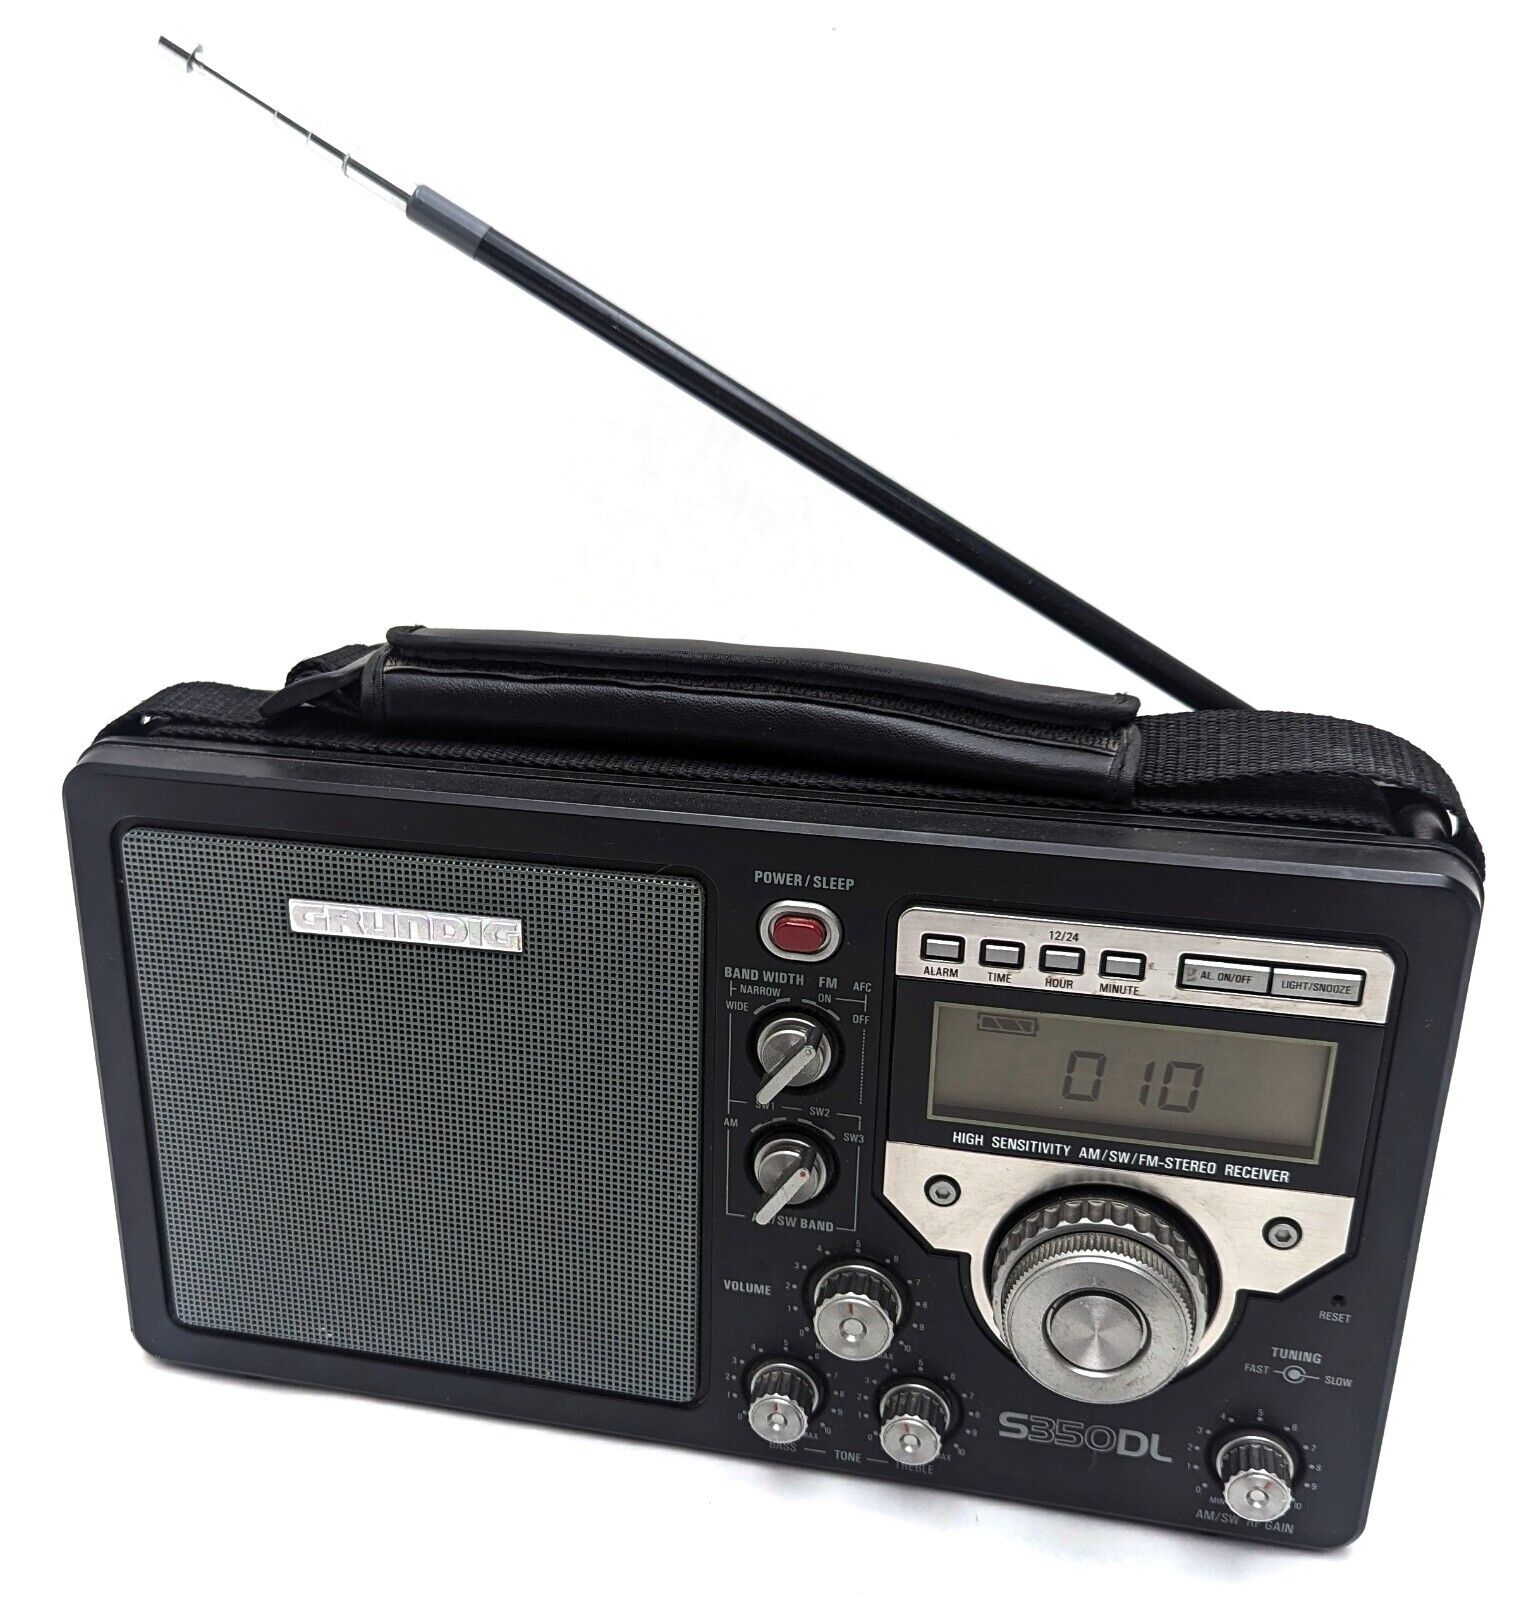 Grundig Model S350DL AM/FM Stereo SW123 High Sensitivity World Receiver Radio